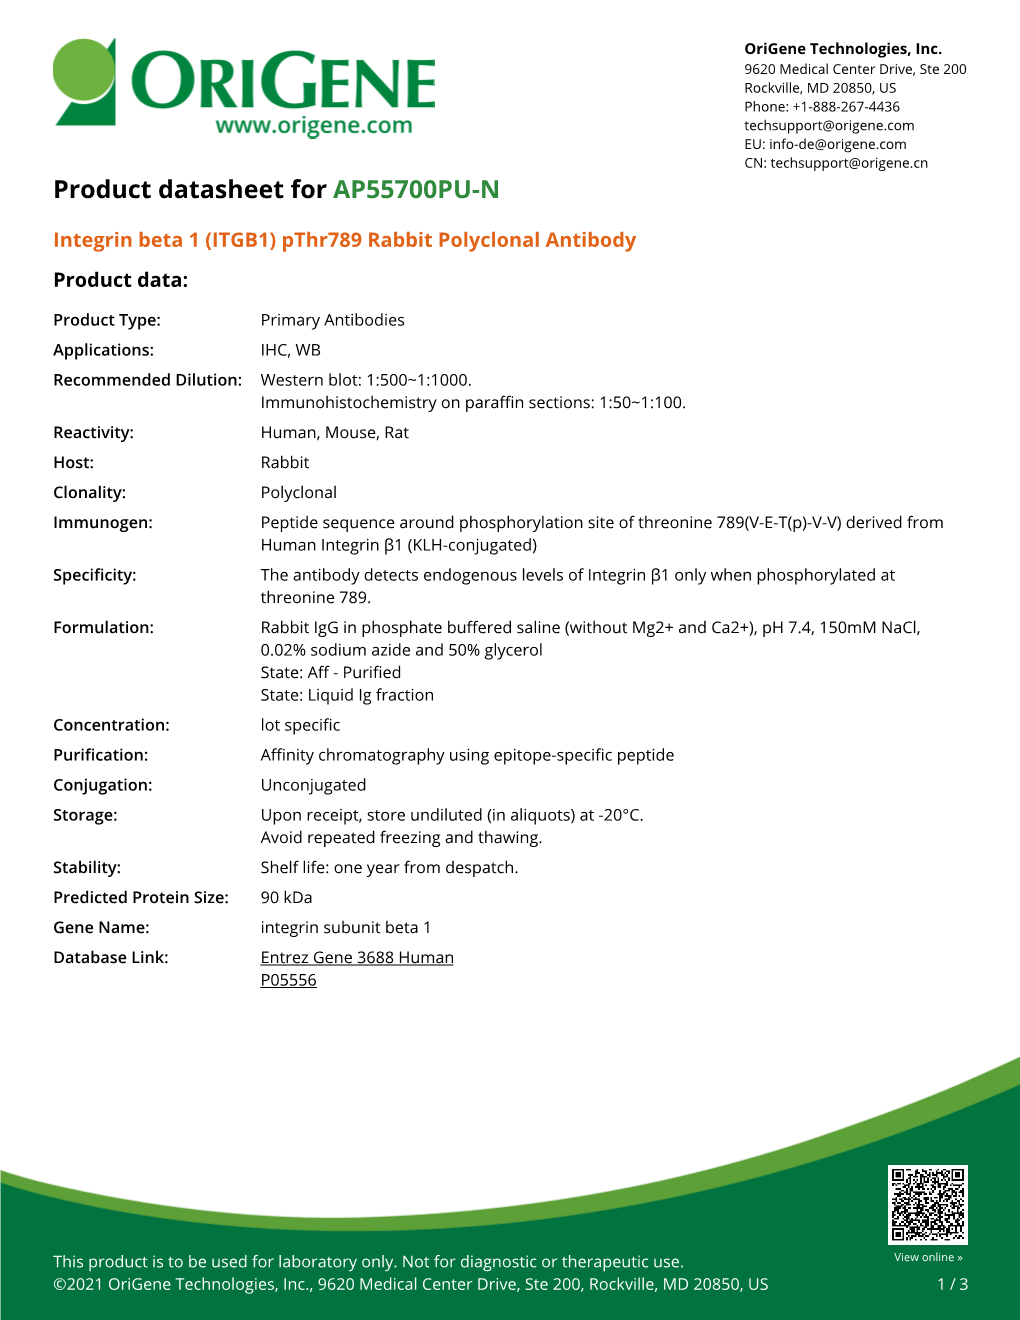 Integrin Beta 1 (ITGB1) Pthr789 Rabbit Polyclonal Antibody Product Data